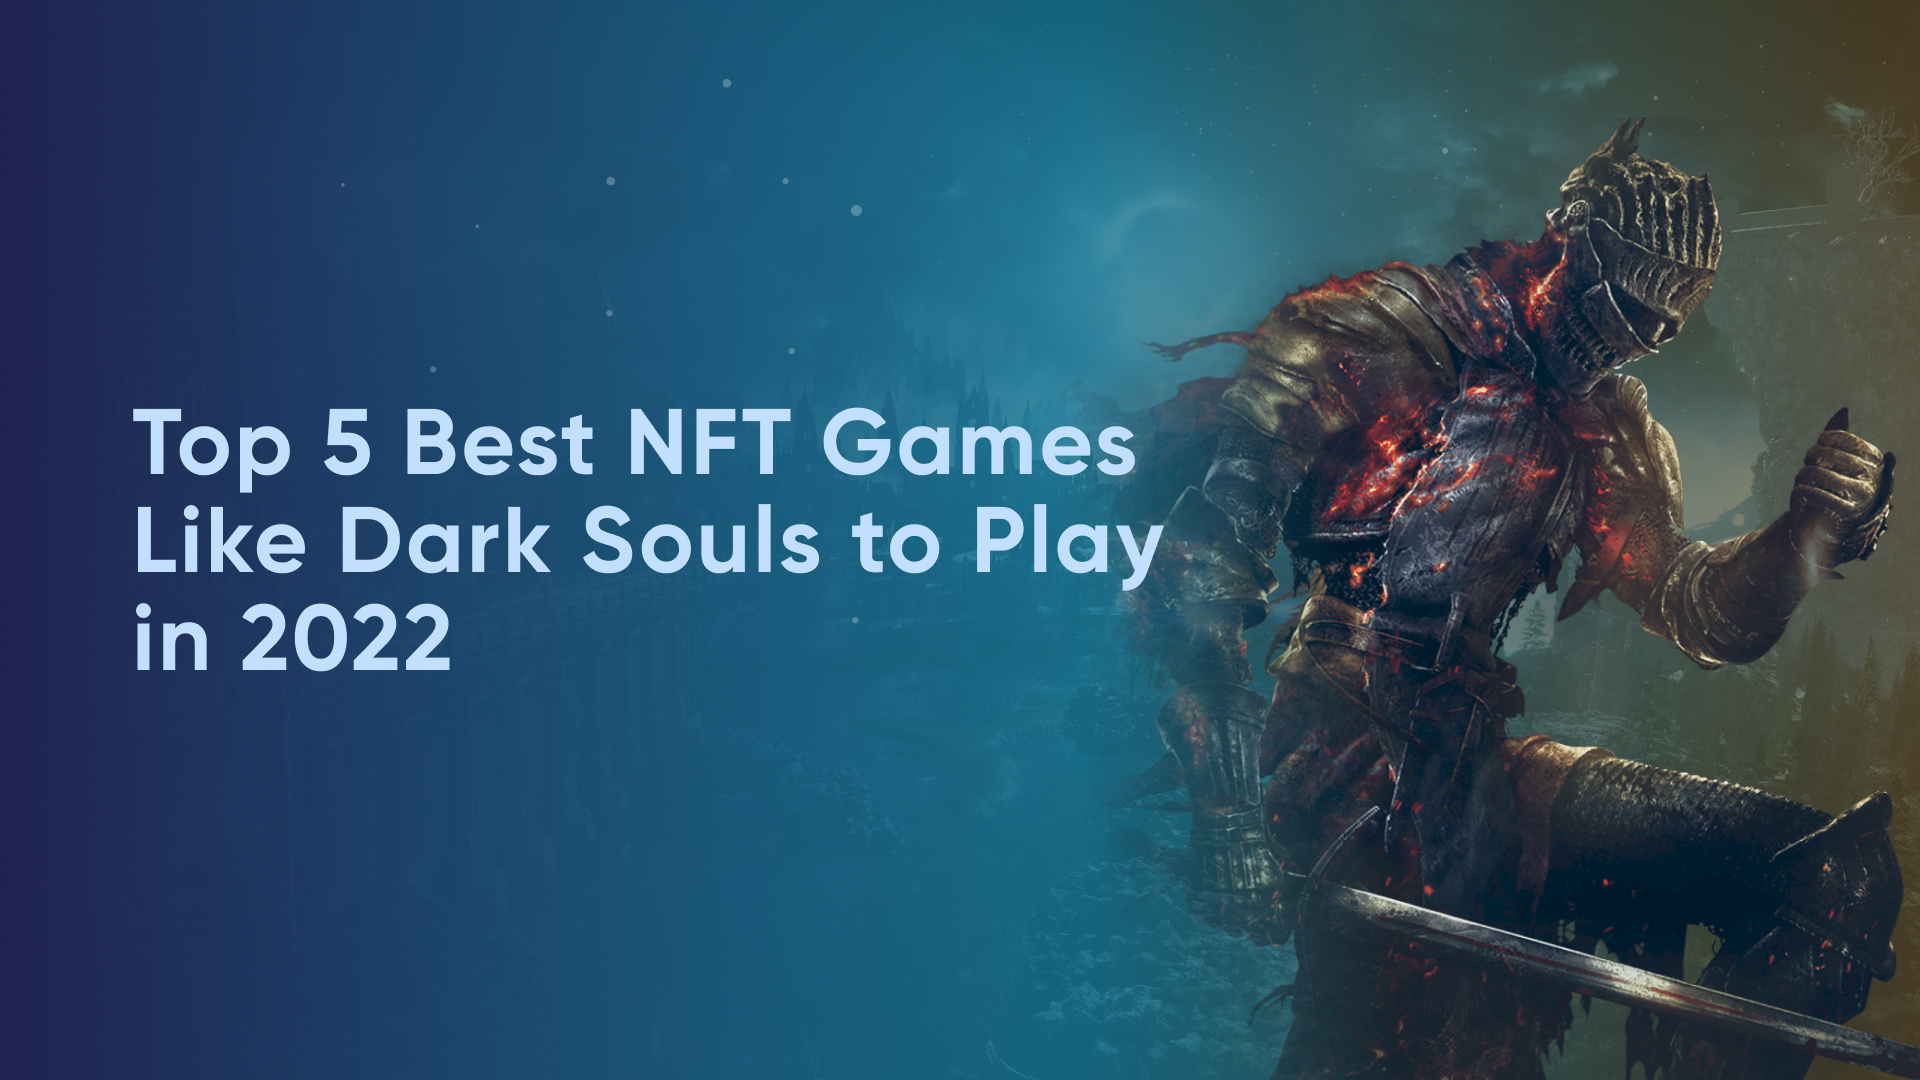 Top 5 Best NFT Games Like Dark Souls to Play in 2022